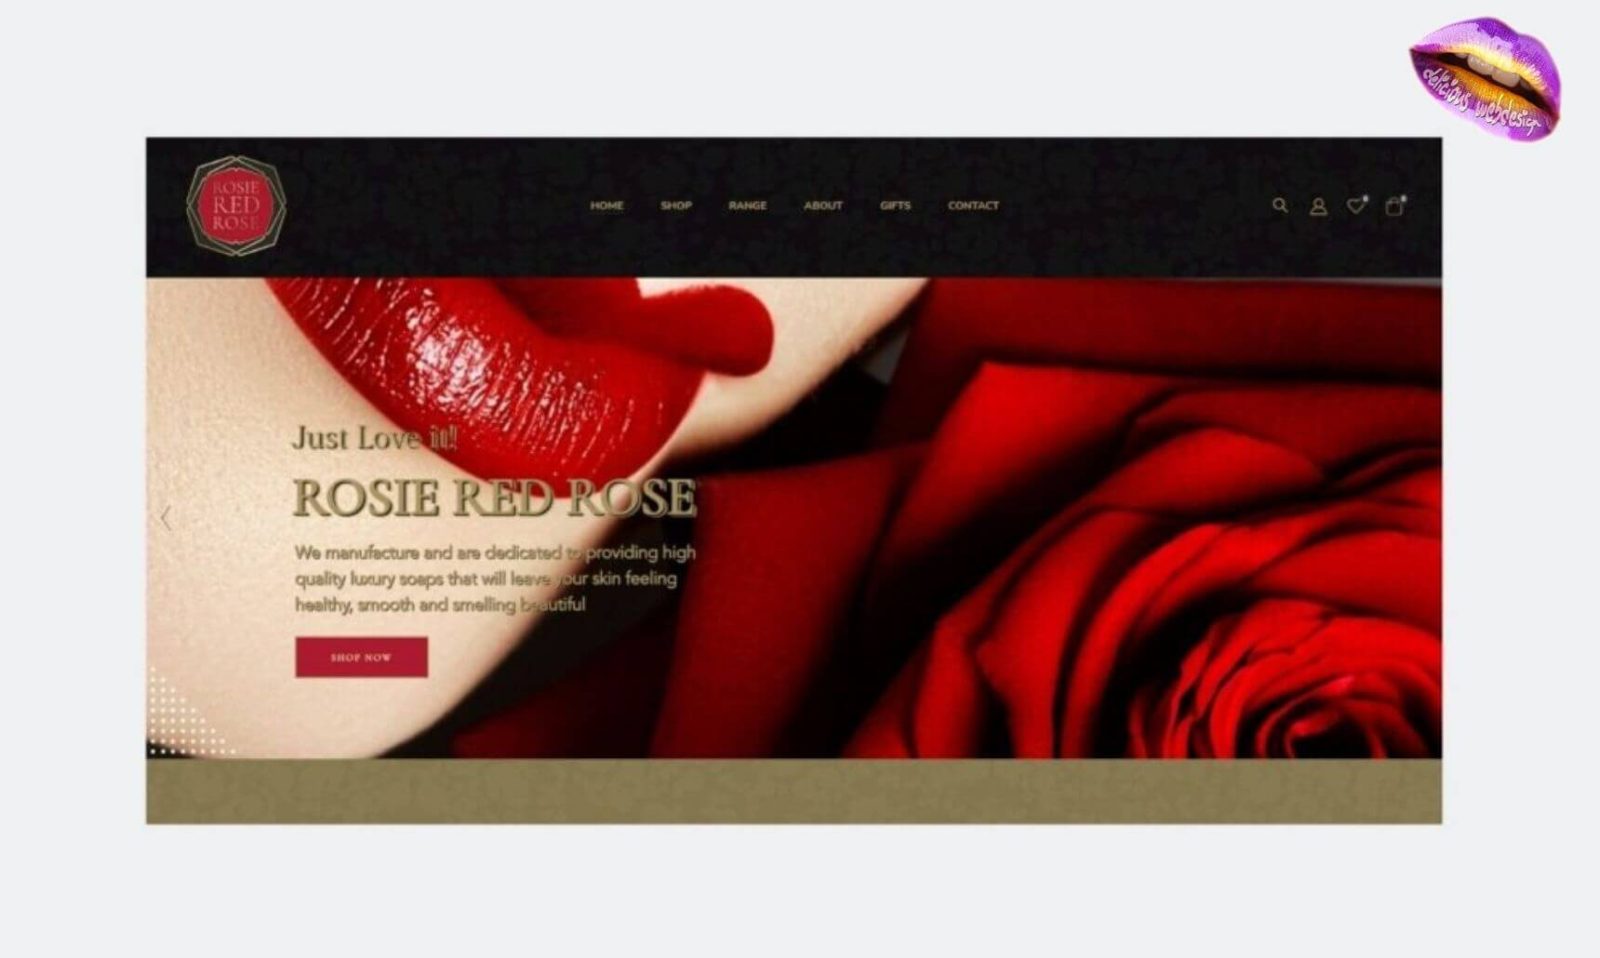 Rosie Red Rose